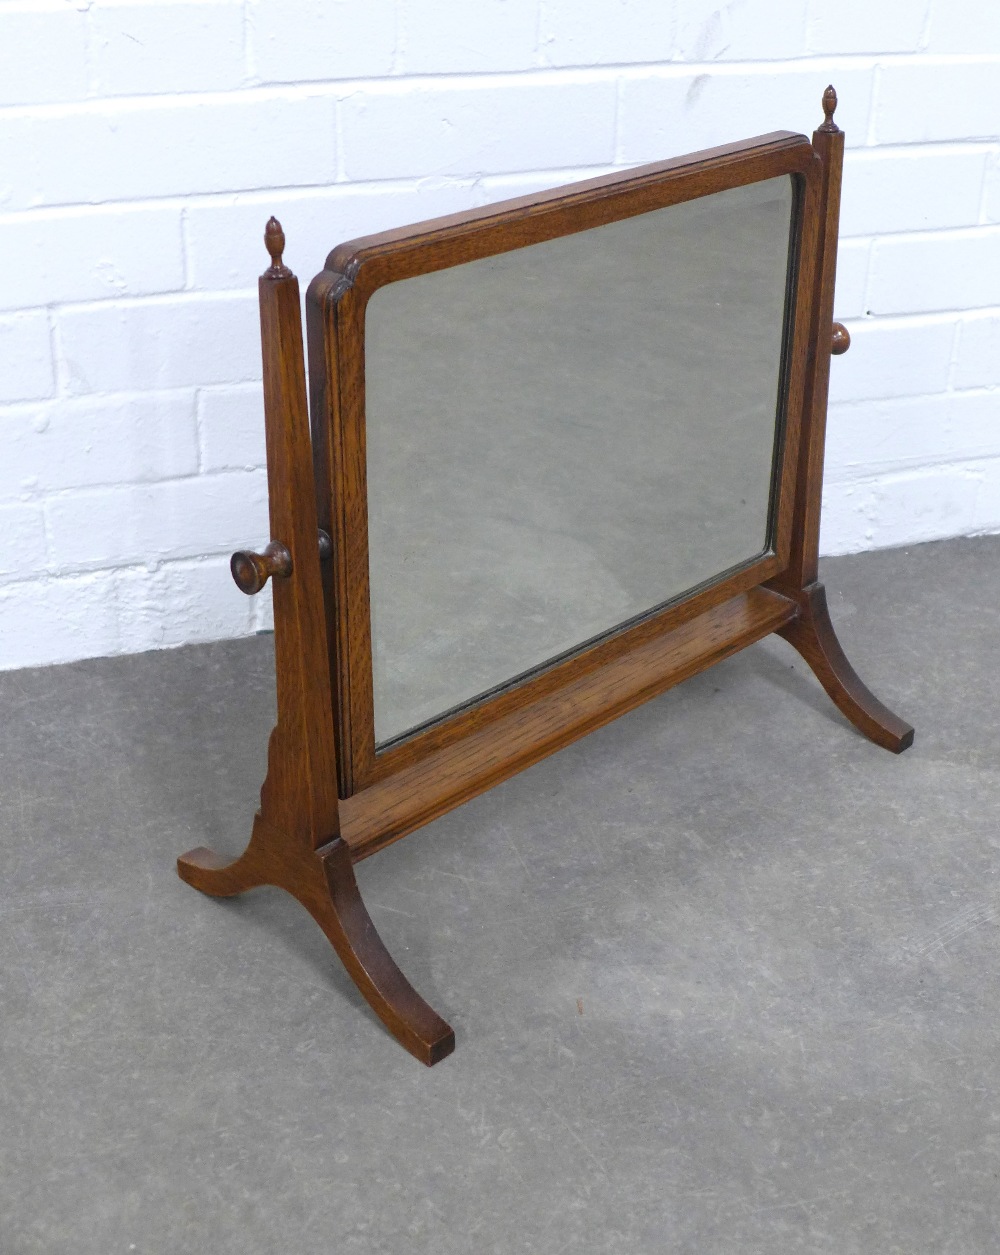 Oak dressing table mirror, 56 x 44cm. - Image 2 of 2